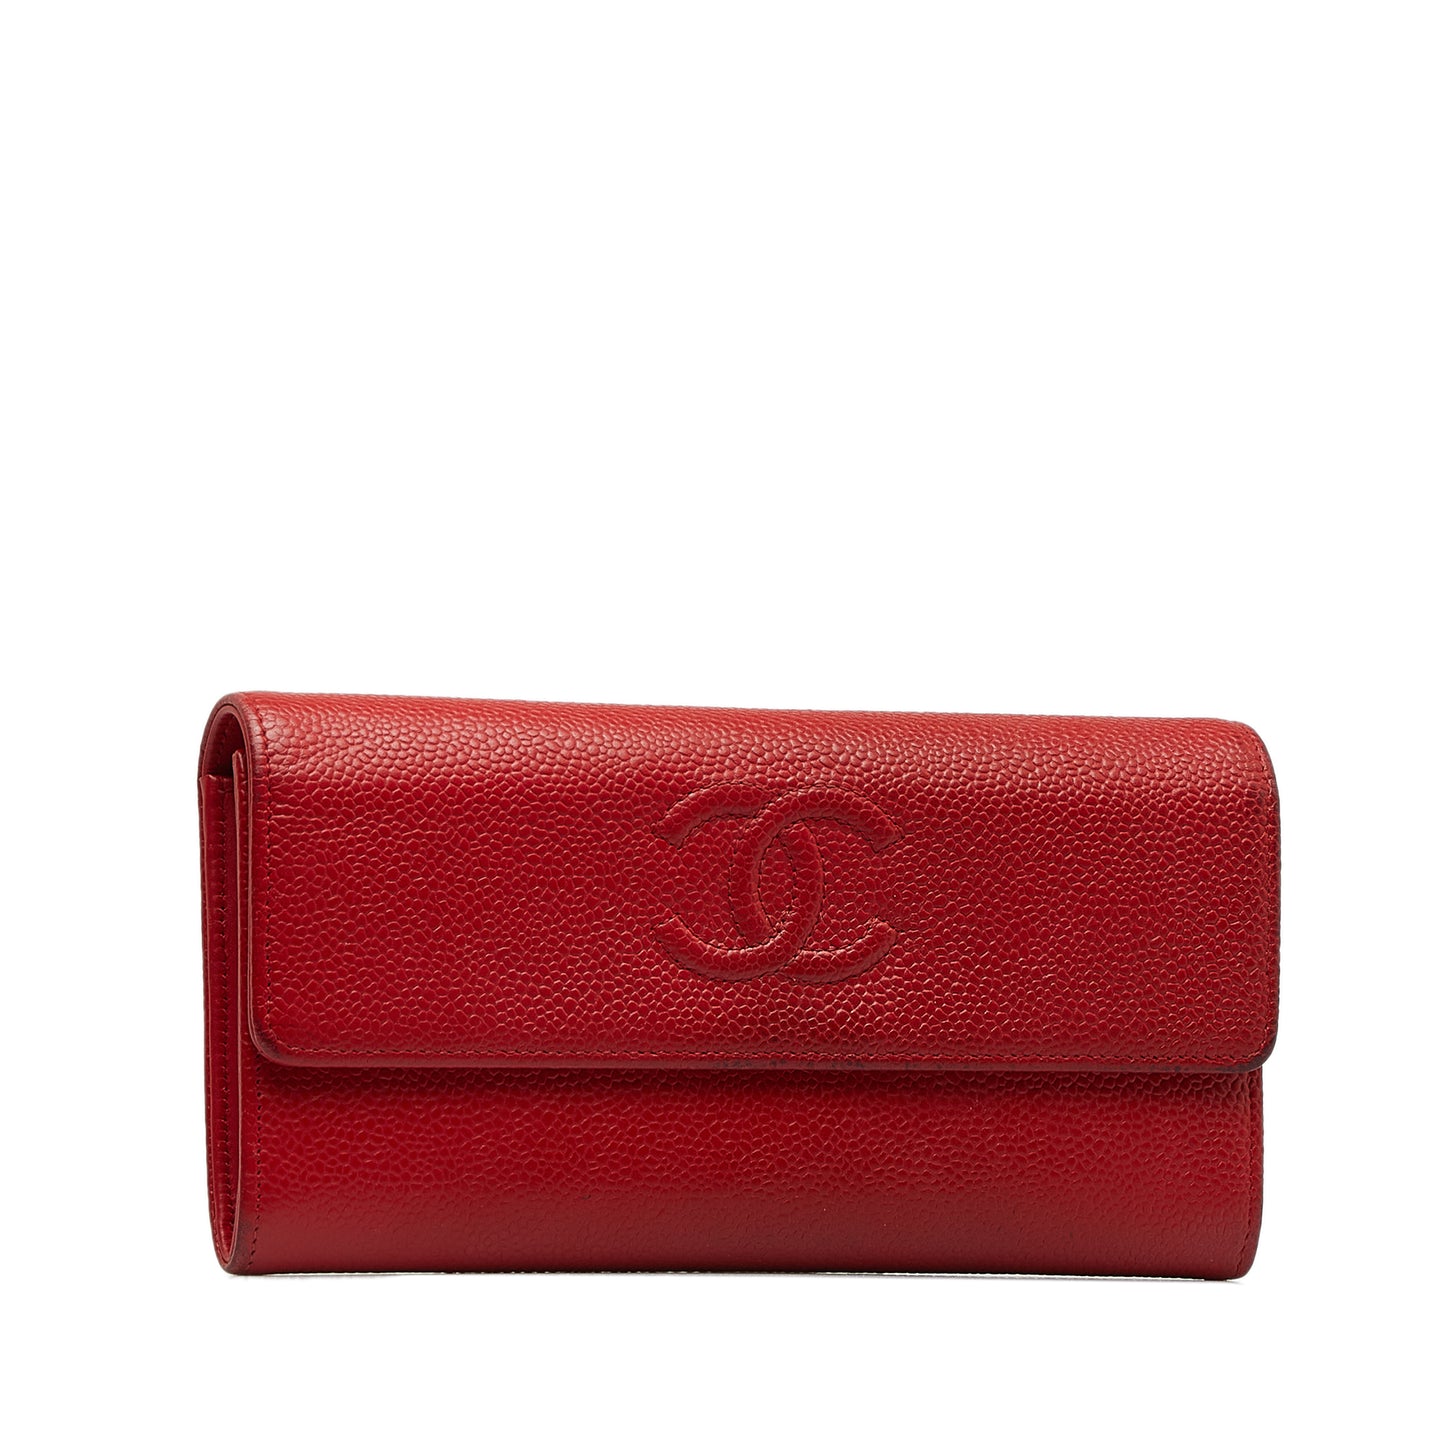 CC Caviar Leather Long Wallet Red - Gaby Paris